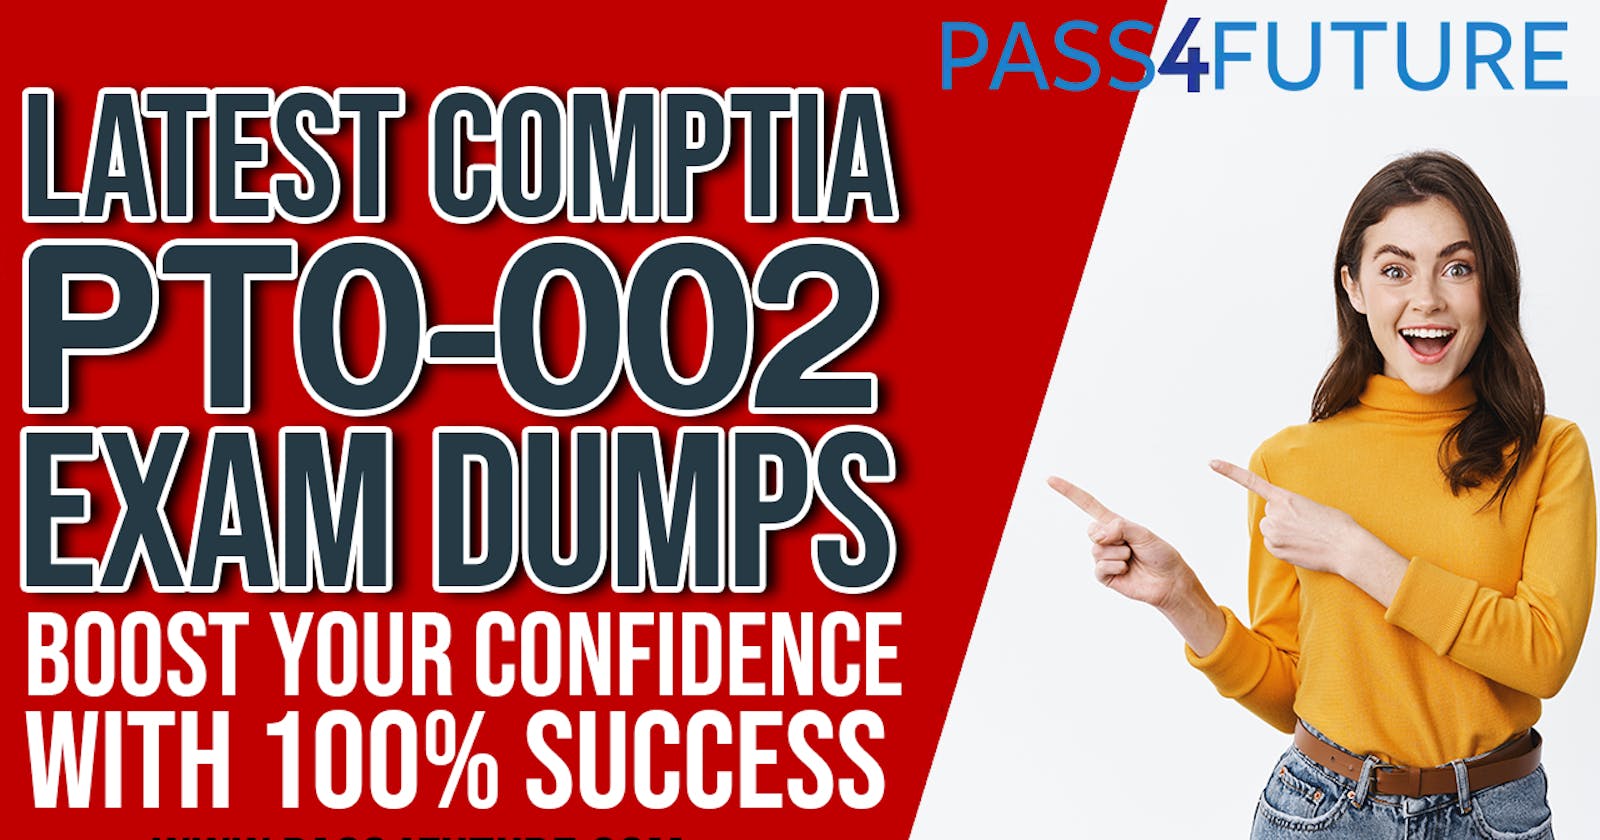 Latest CompTIA PT0-002 Exam Dumps to Boost Up Exam Preparation